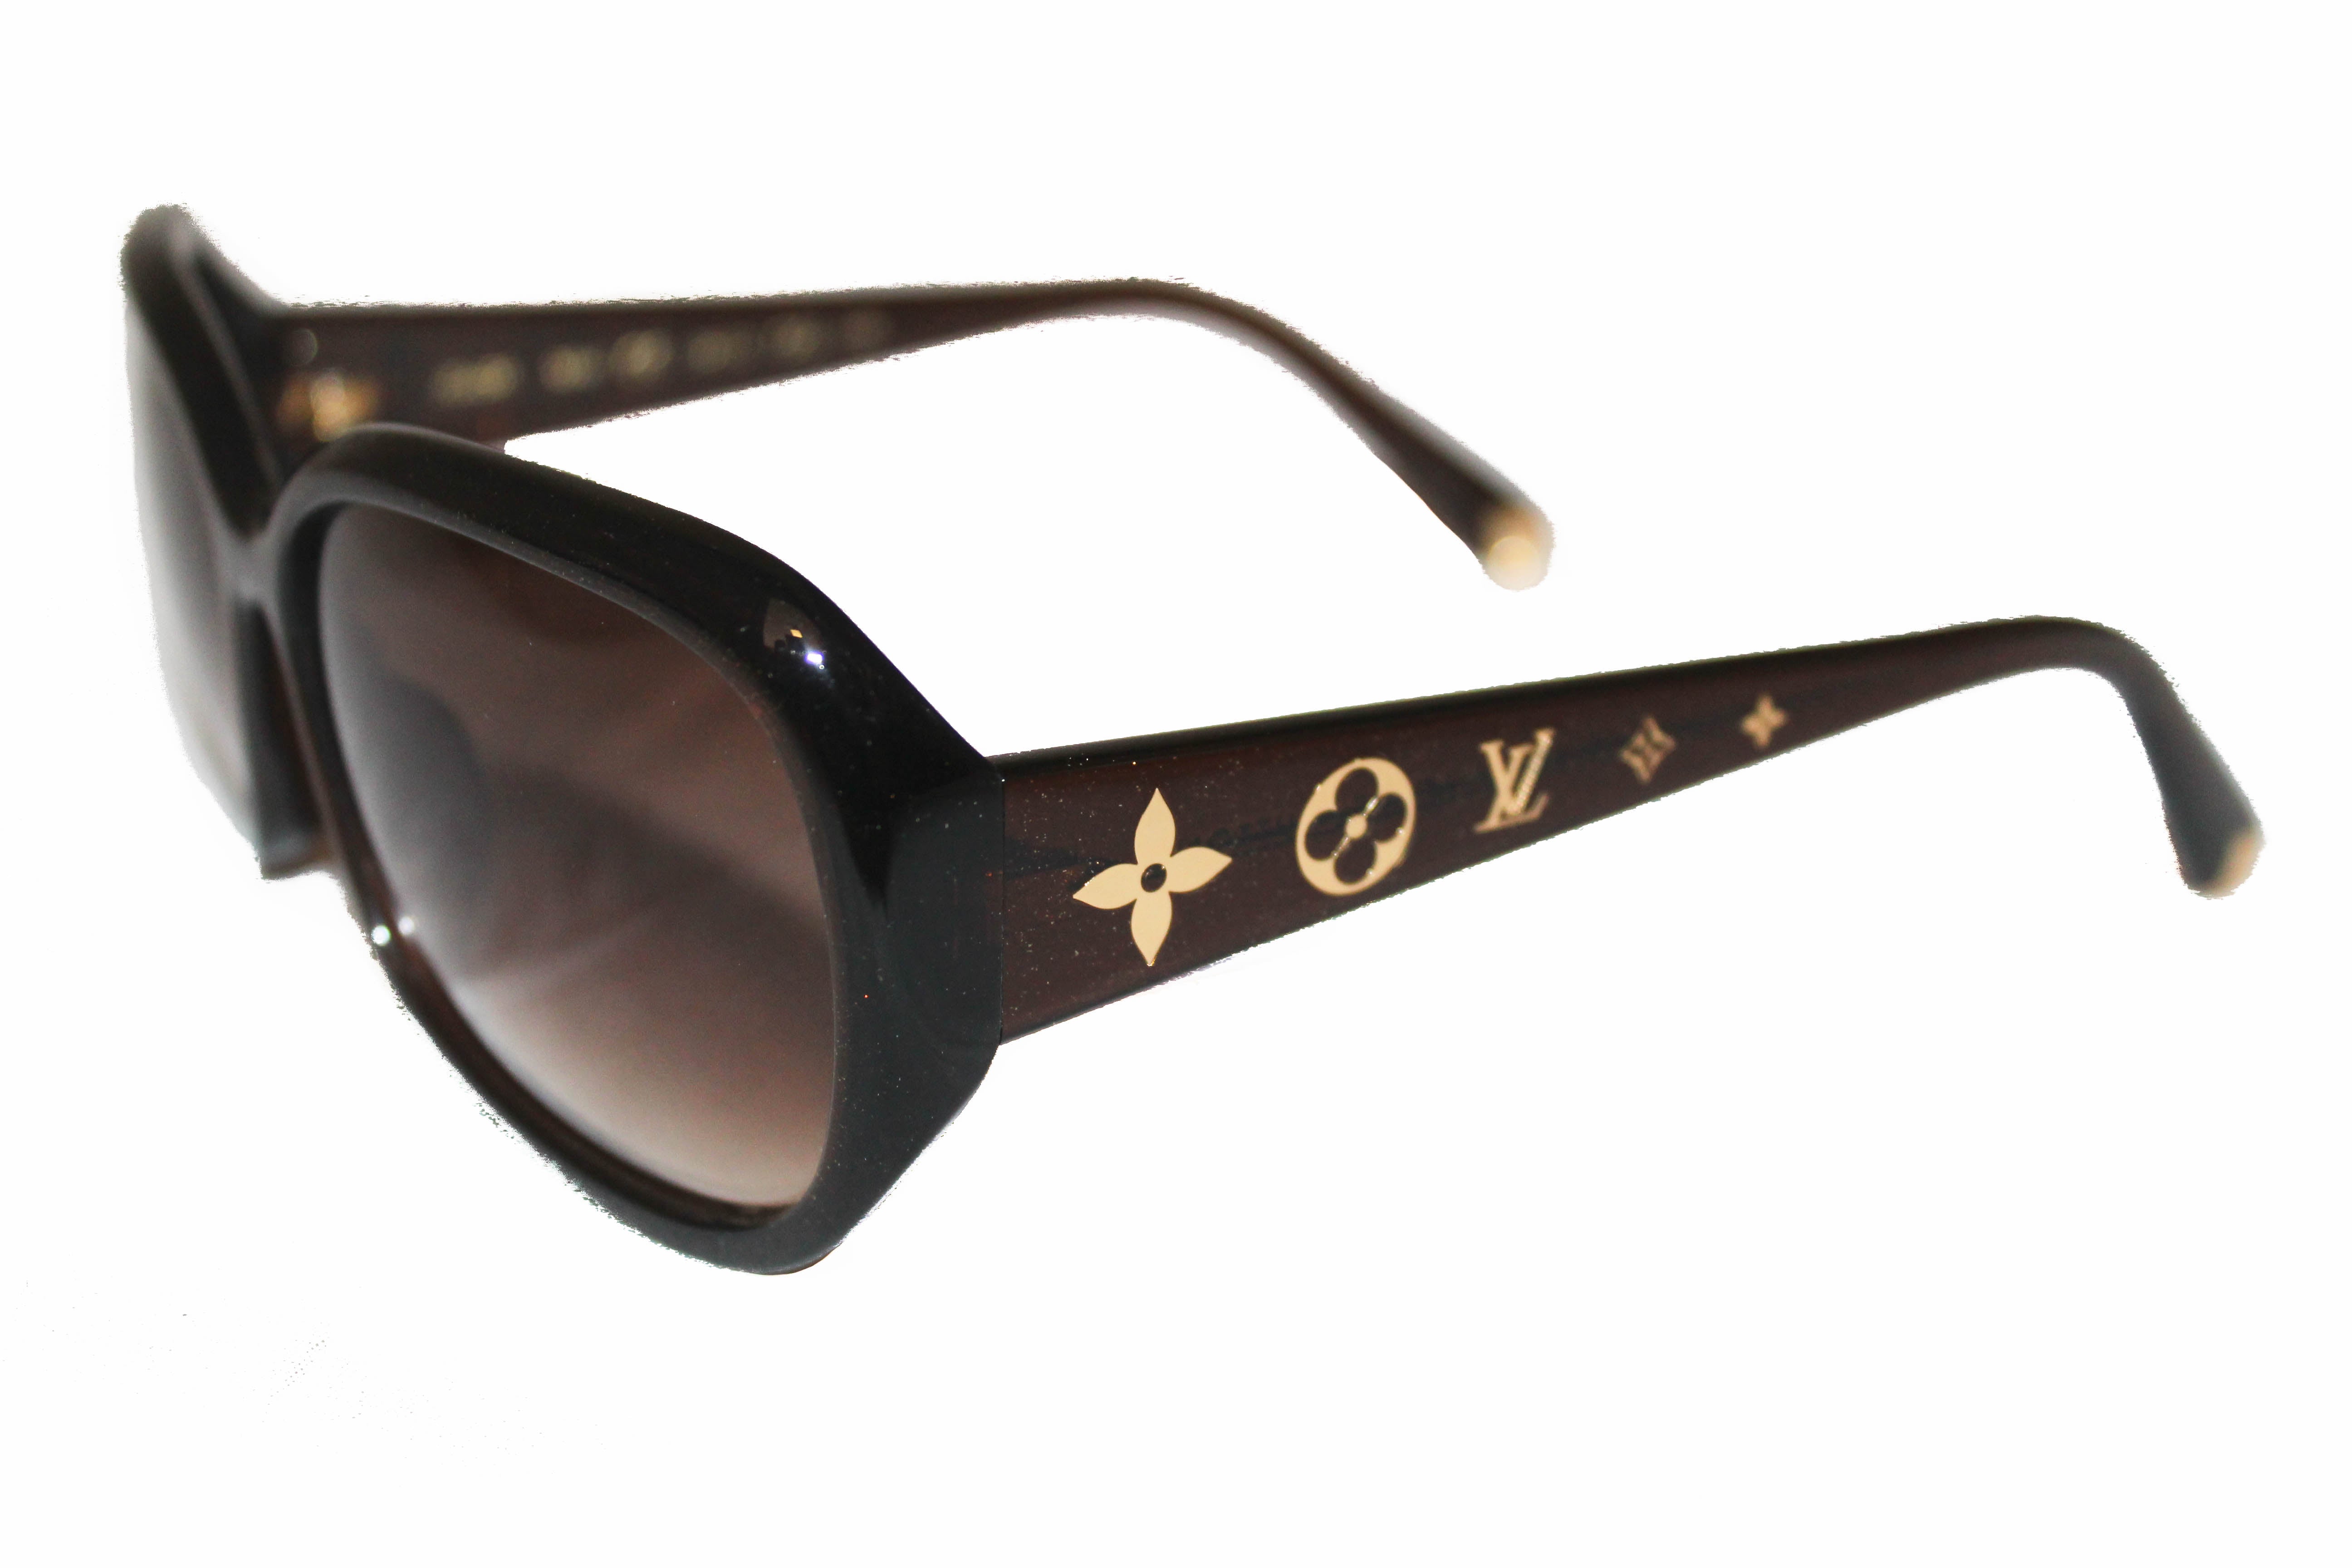 LOUIS VUITTON, Acetate Obsession GM Sunglasses, aurinkolasit, ruskea  glitterillä, sangat klassisella monogrammikoristeella, Z0459W.  Vintage-vaatteet ja asusteet - Auctionet